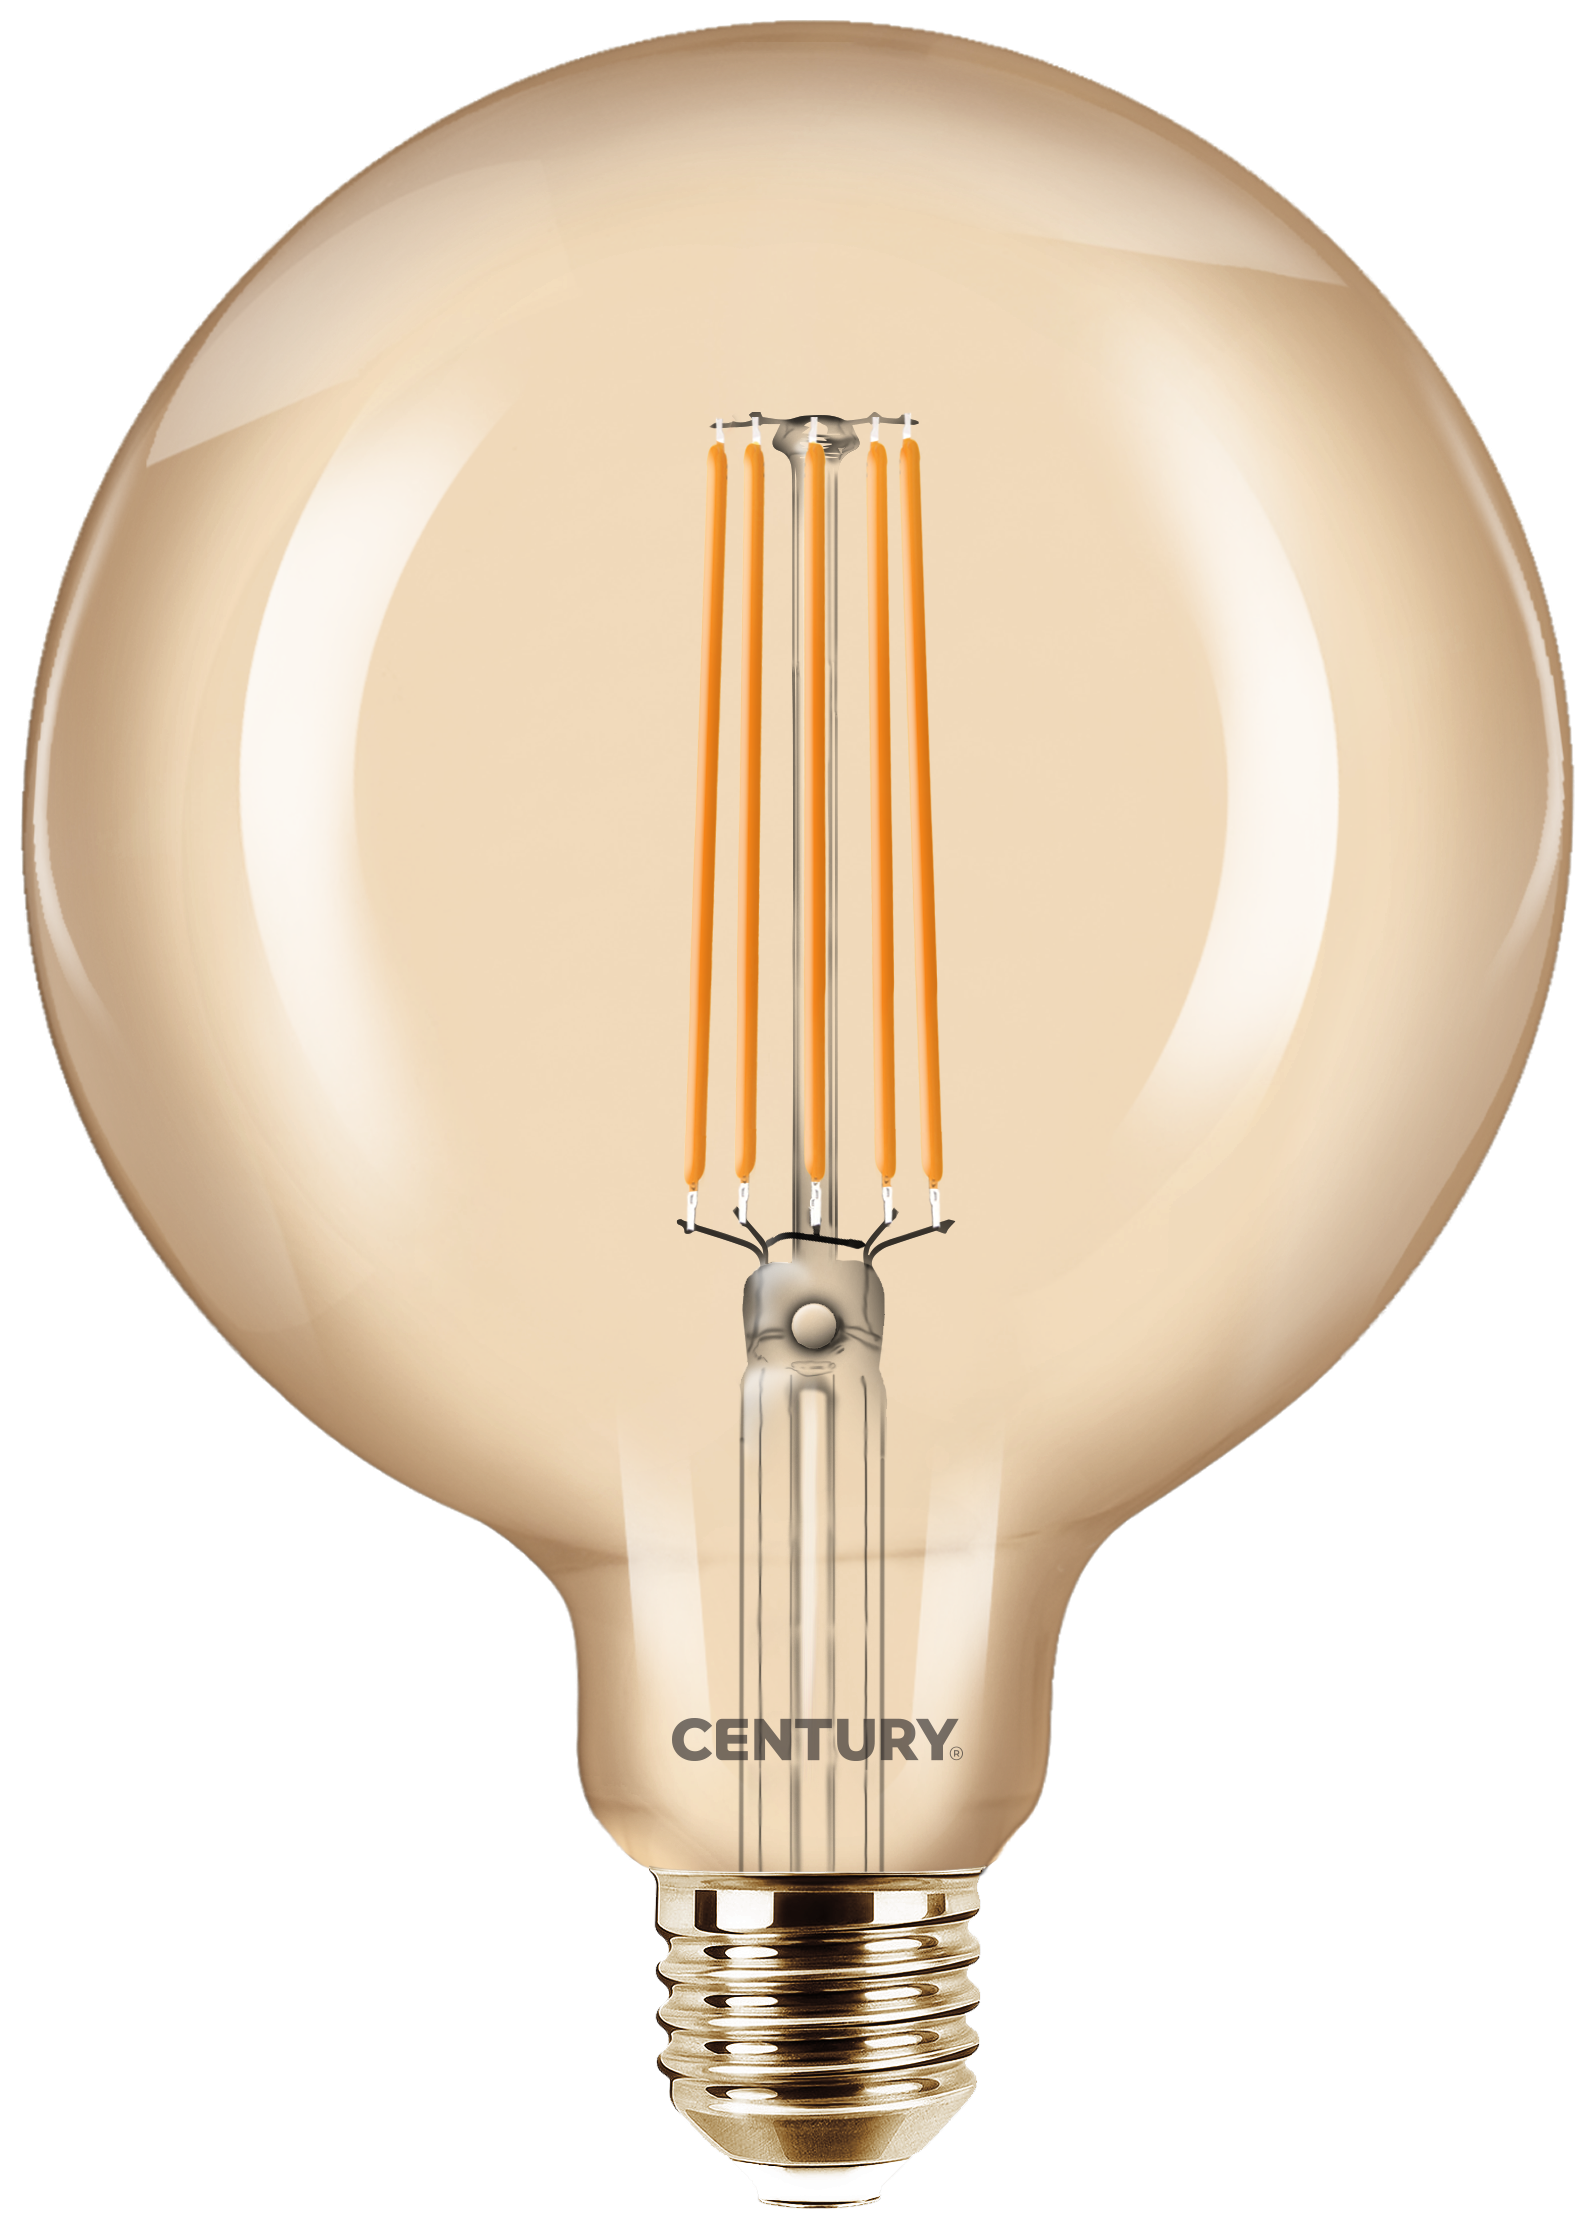 CENTURY CENTURY 2 LAMPADINE LED INCANTO SATINATE OLIVA A